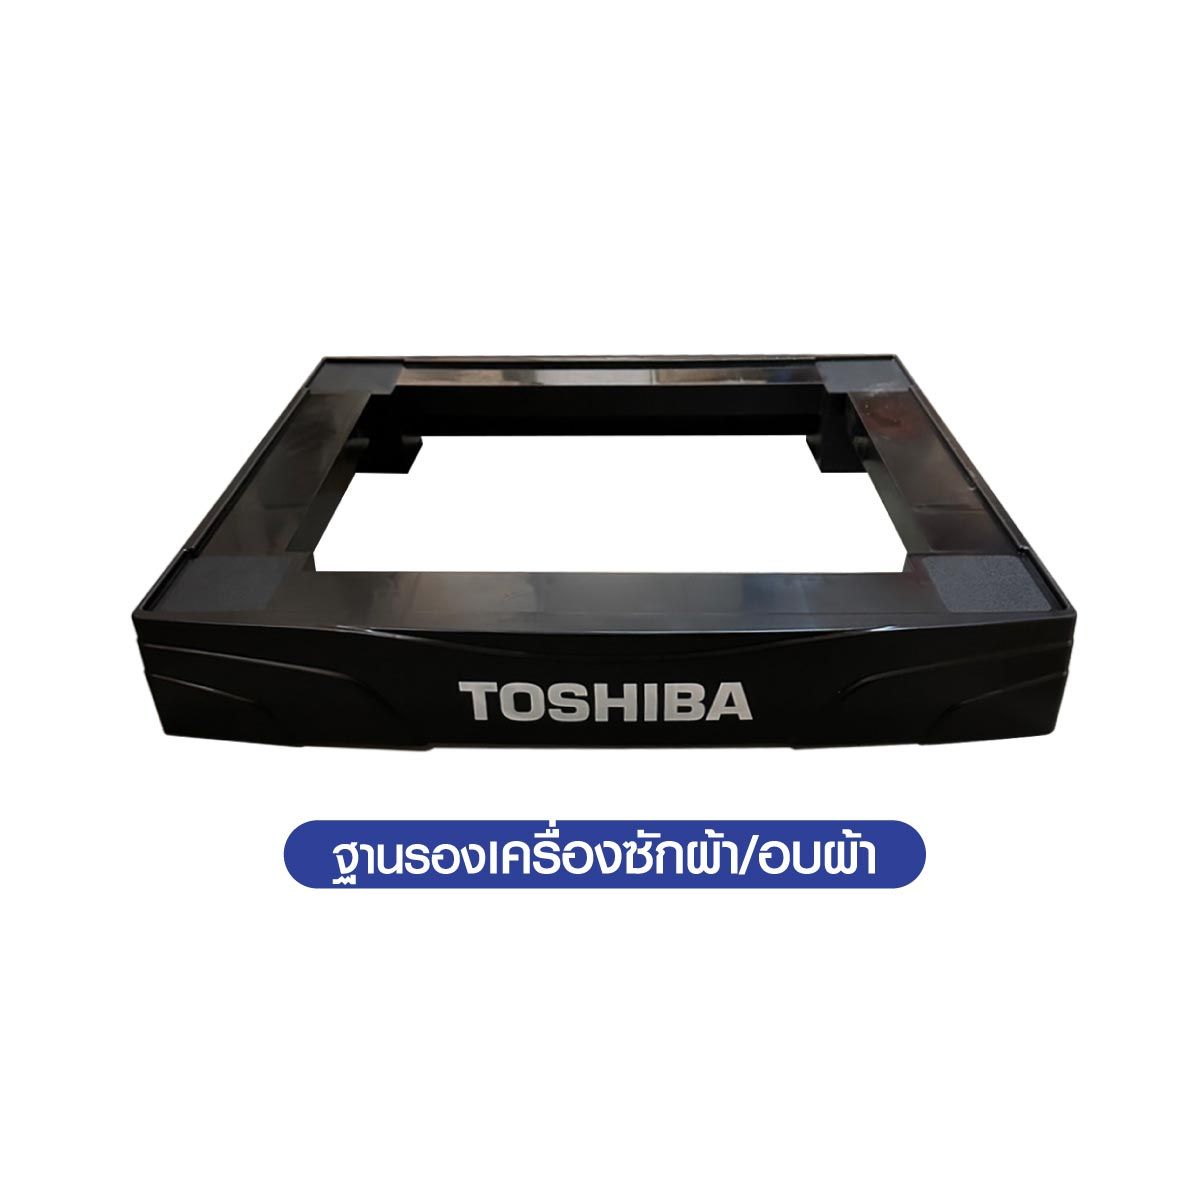 TOSHIBA เครื่องซักผ้าฝาหน้า Dual Drum Washer Dryer 5kg และ10/7kg สีเทา รุ่น TWD-BL160D4S(MG)